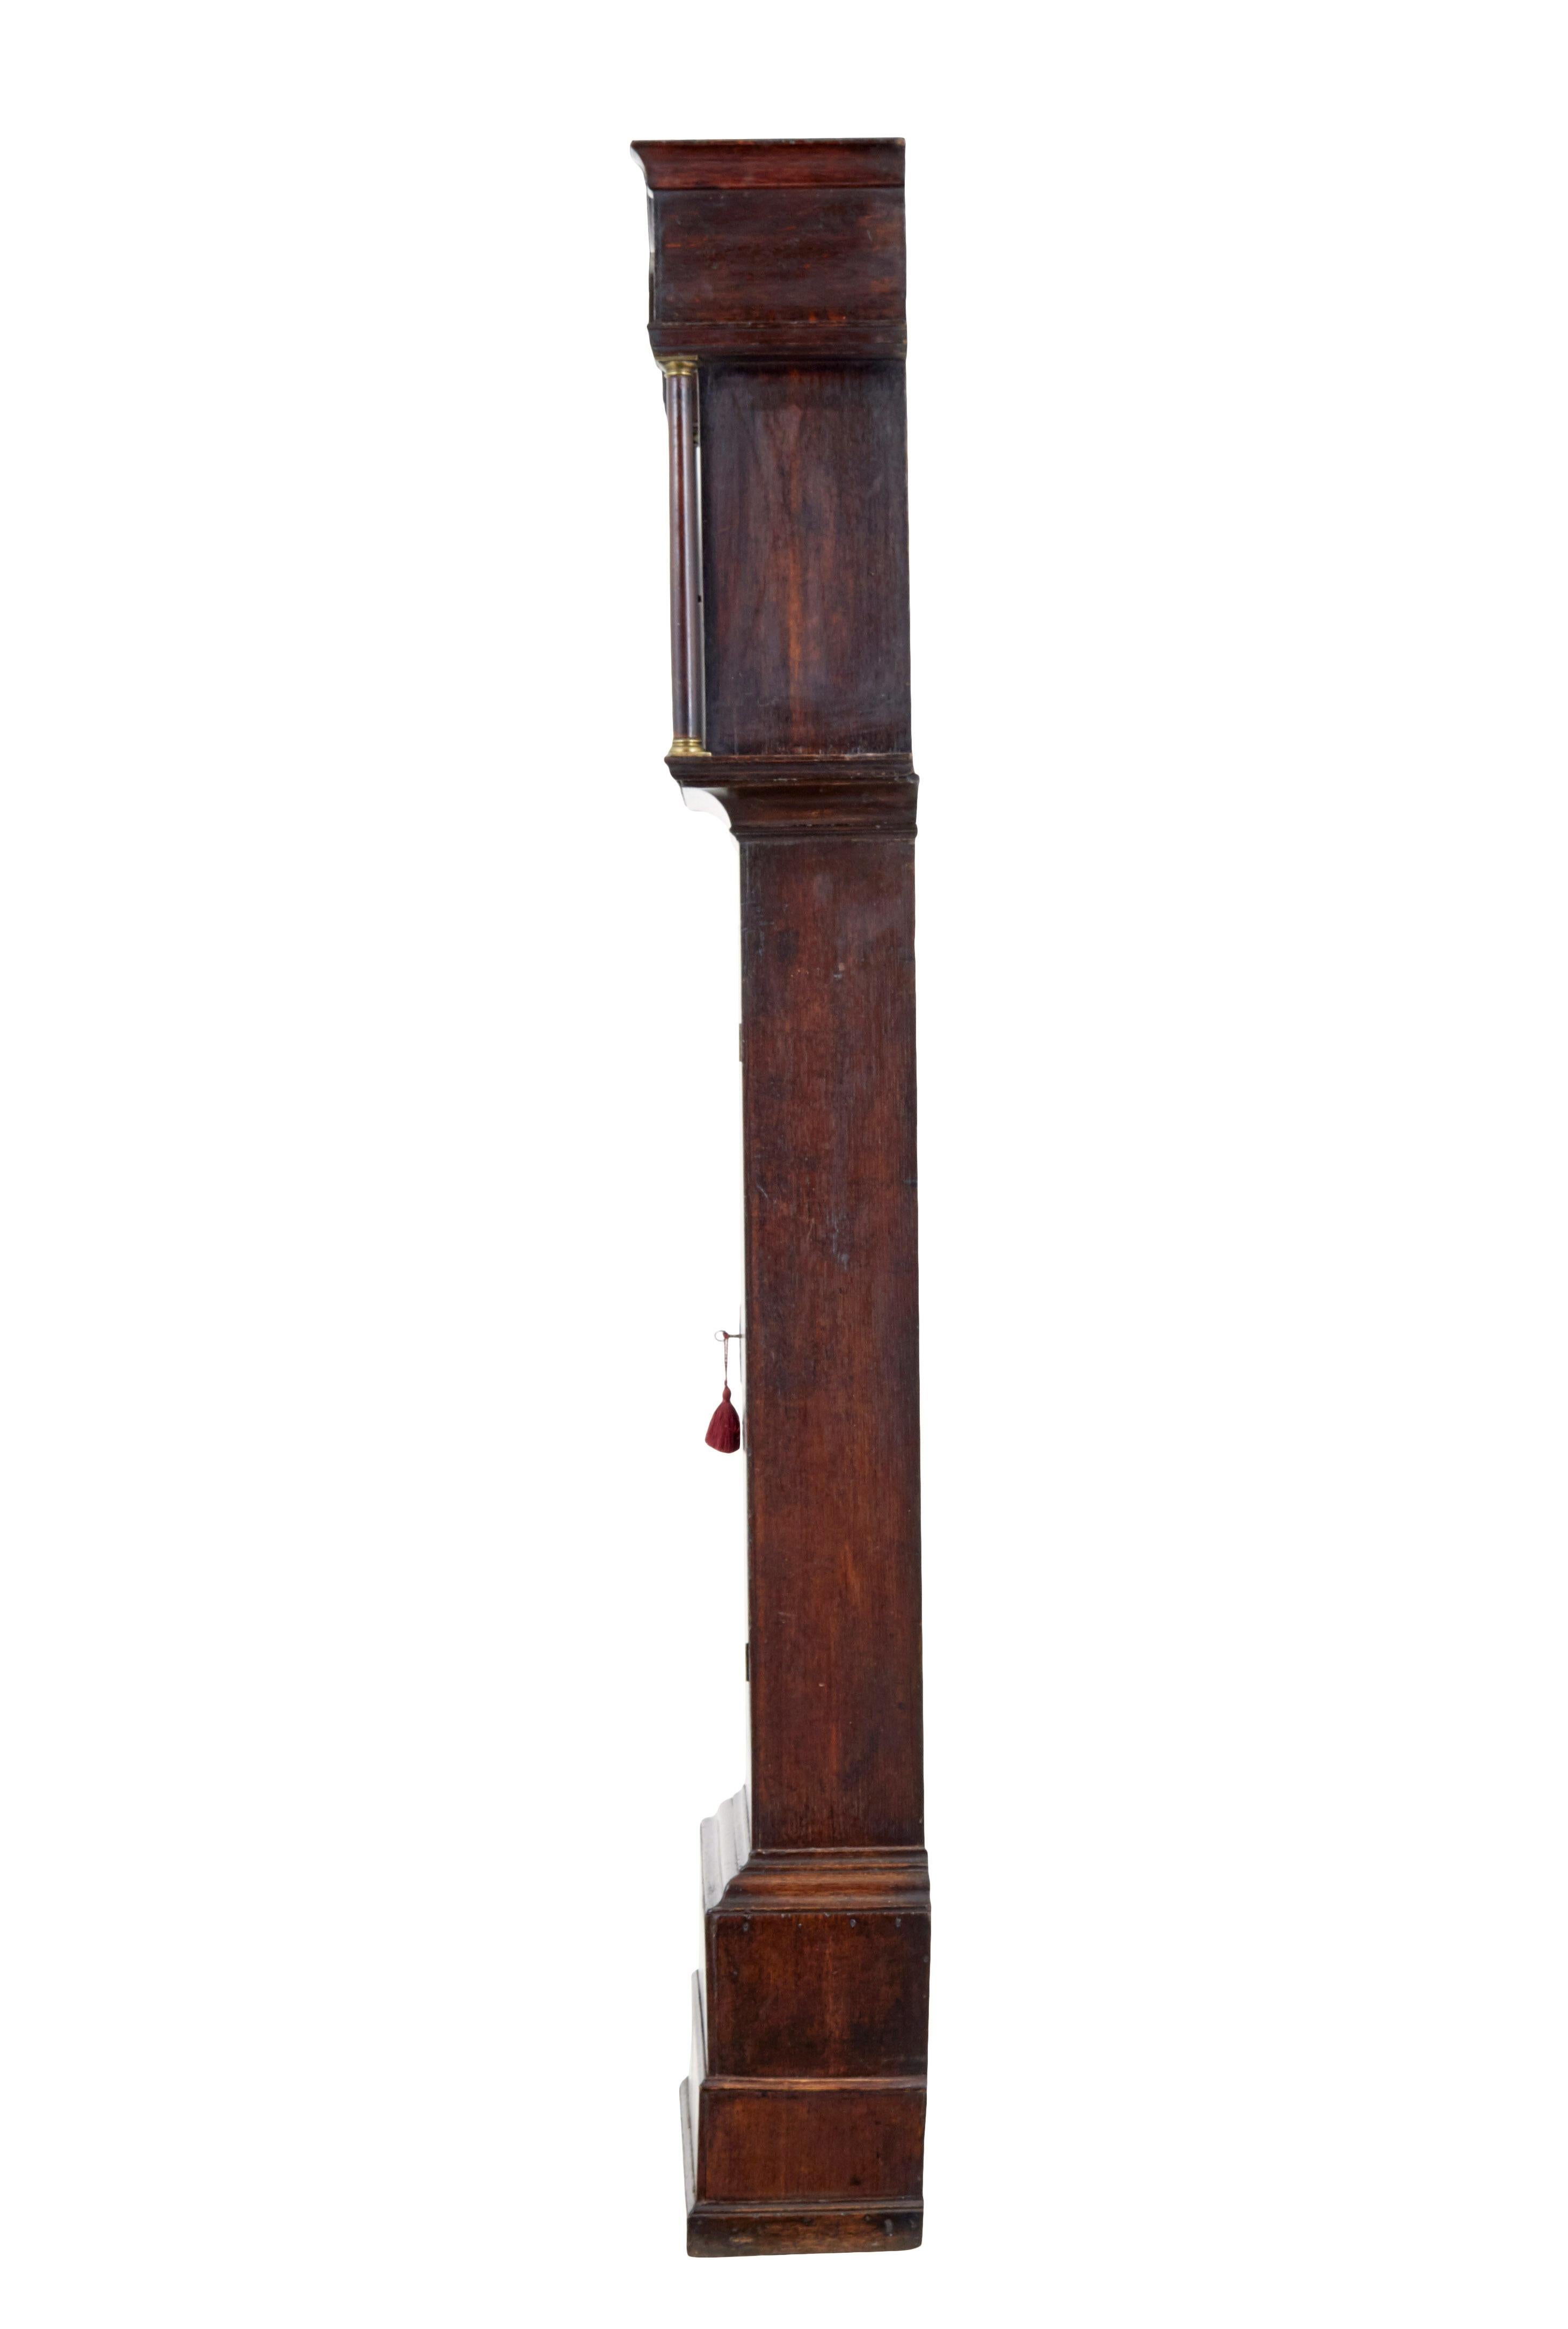 English Georgian early 19th century oak long case clock